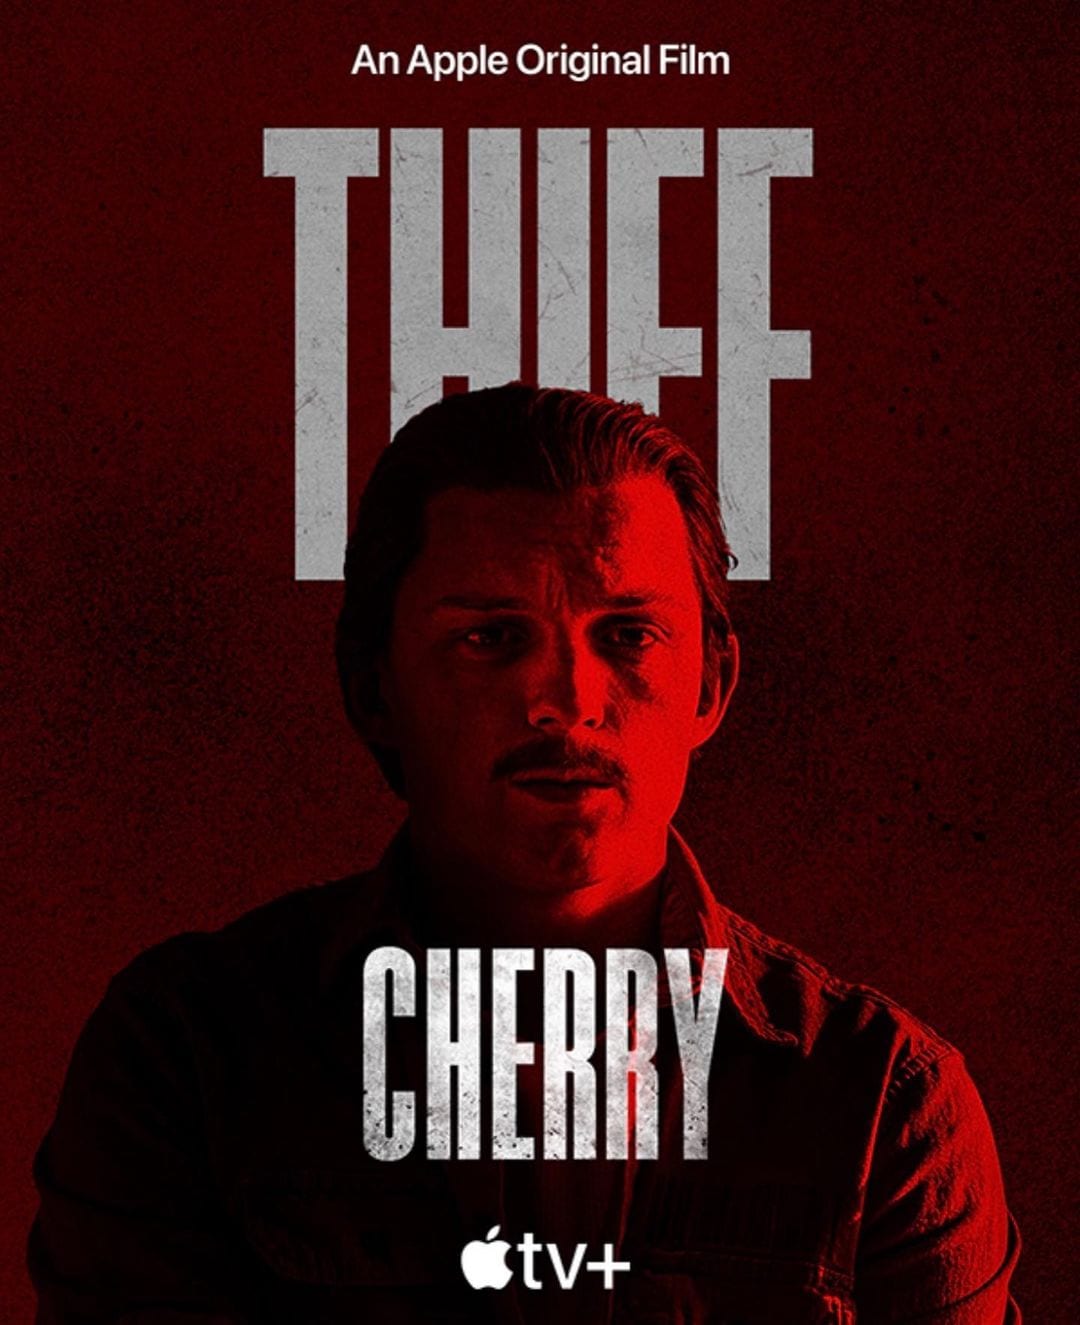 cherry poster 06